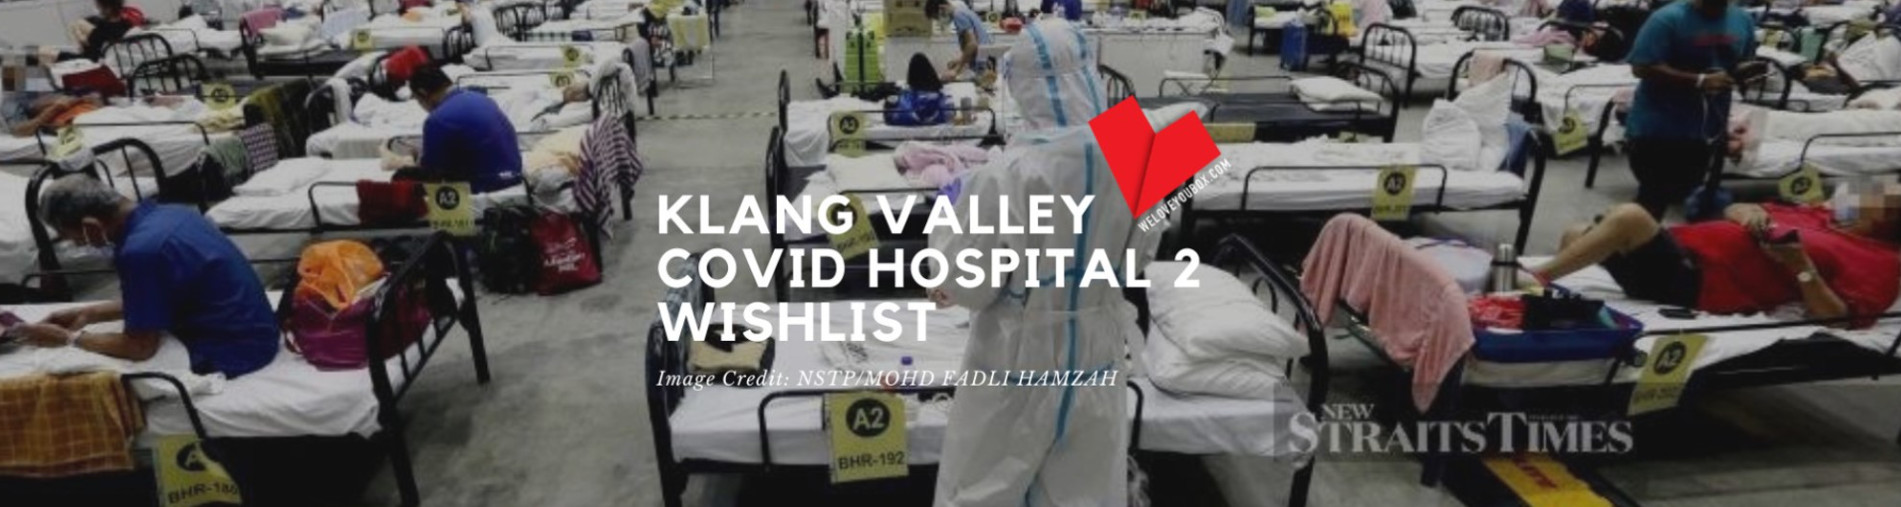 Klang Valley Covid Hospital 2 Wishlist